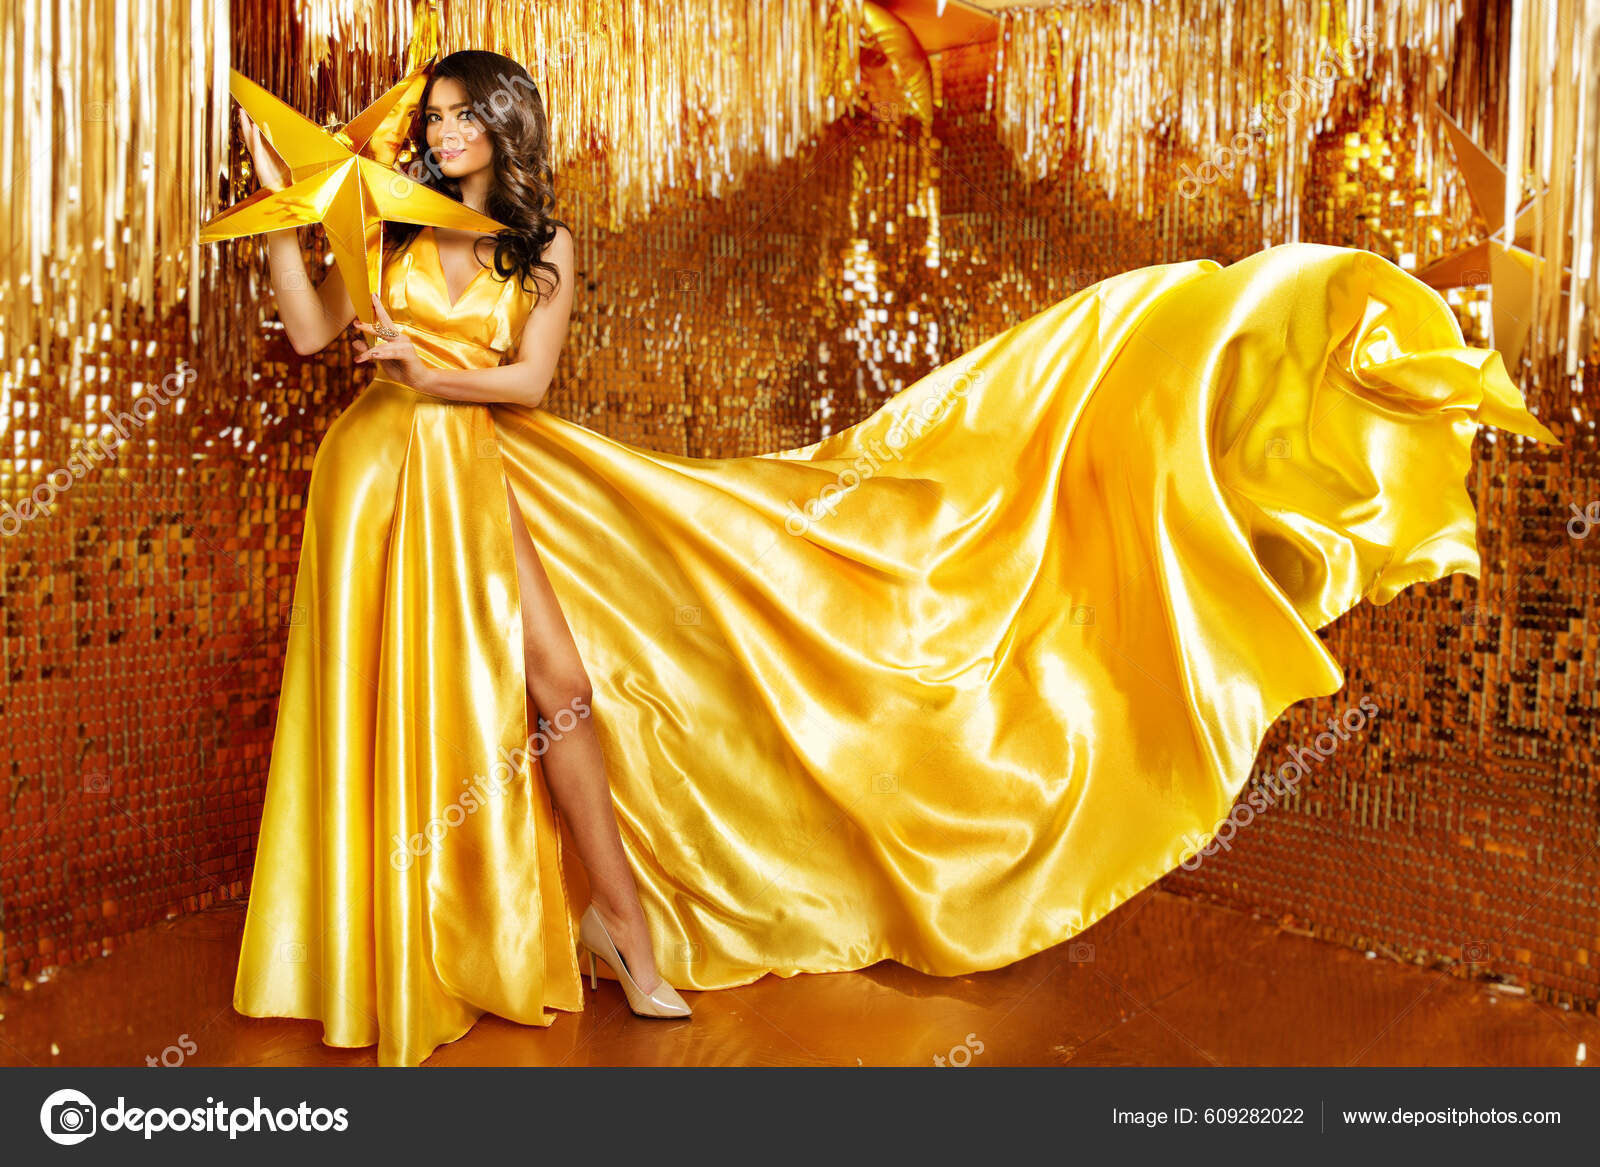 Golden Globes Dresses That Went Viral: Lady Gaga, Jenna Ortega & More